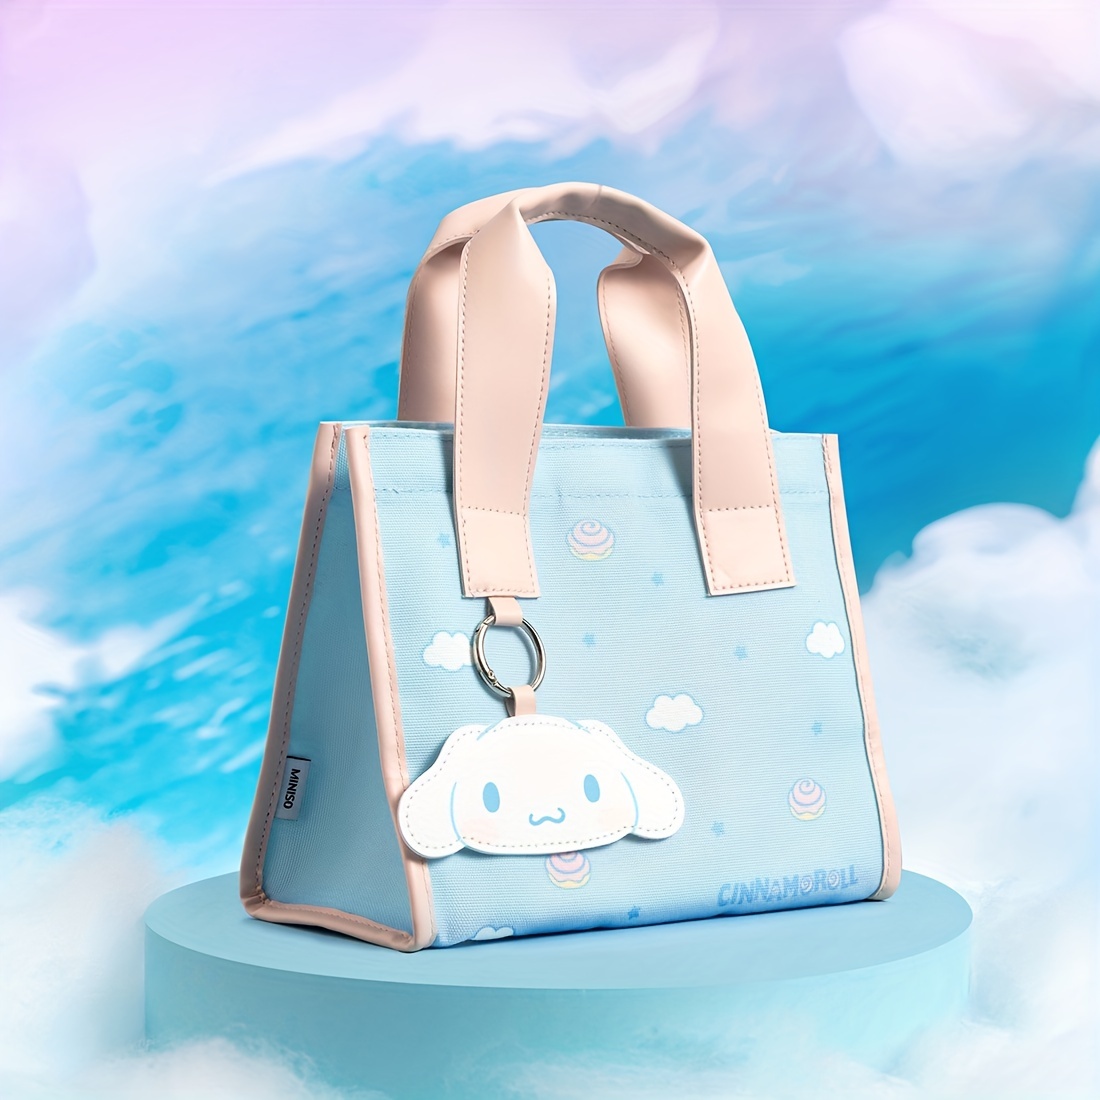 Sanrio Lunch Bag with Camera Design – In Kawaii Shop